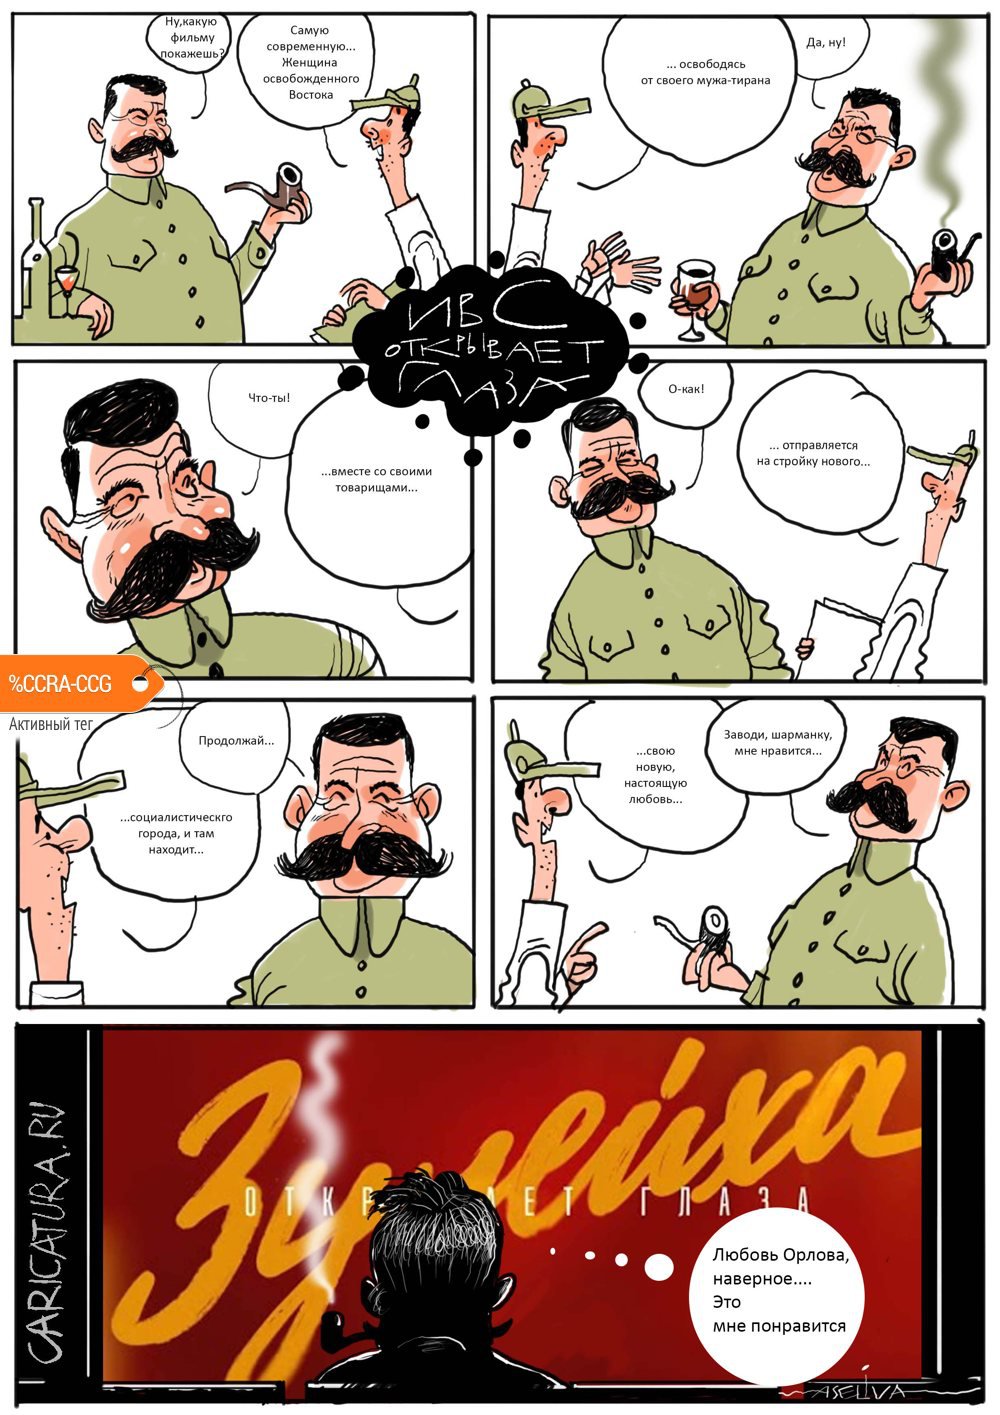 Комикс "Что же открыла Зулейха?", Андрей Селиванов